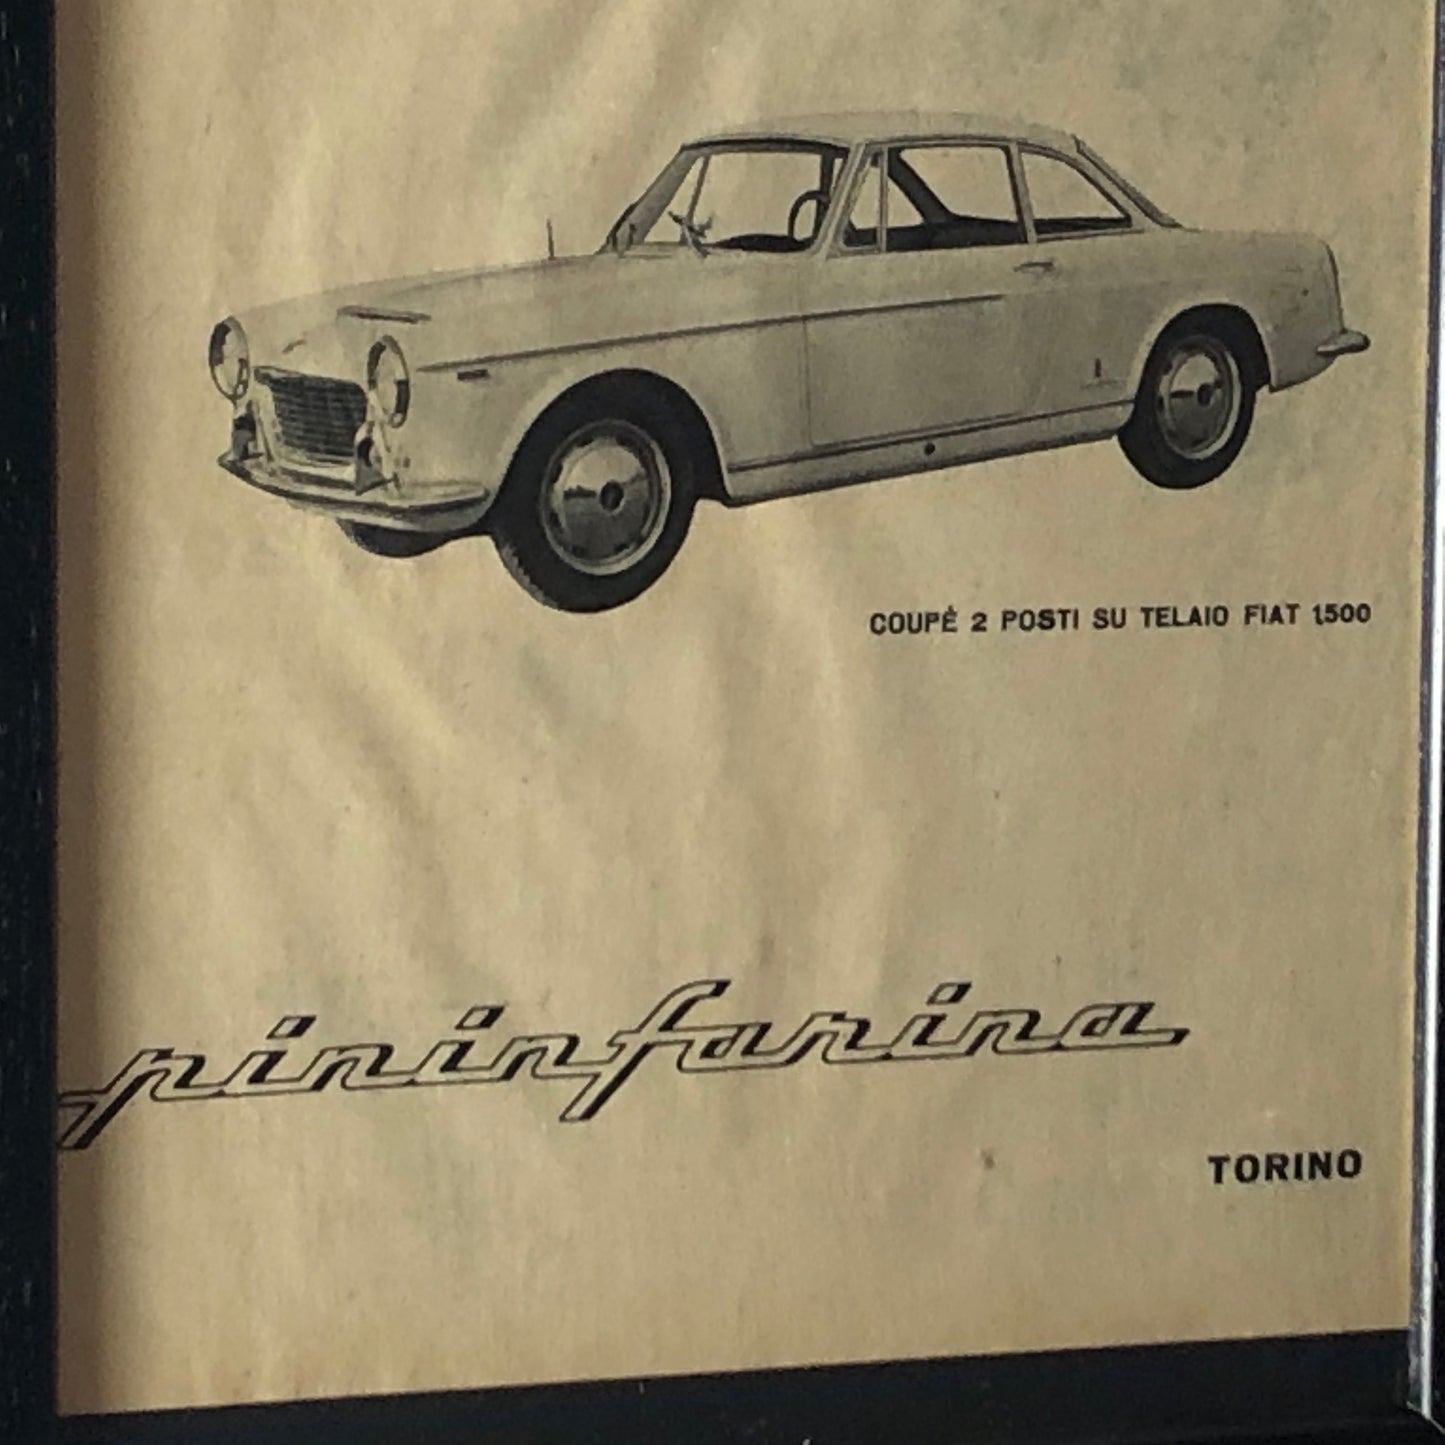 Pininfarina, 1960 Advertising Pininfarina 2 Seater Coupé on Fiat 1500 Chassis